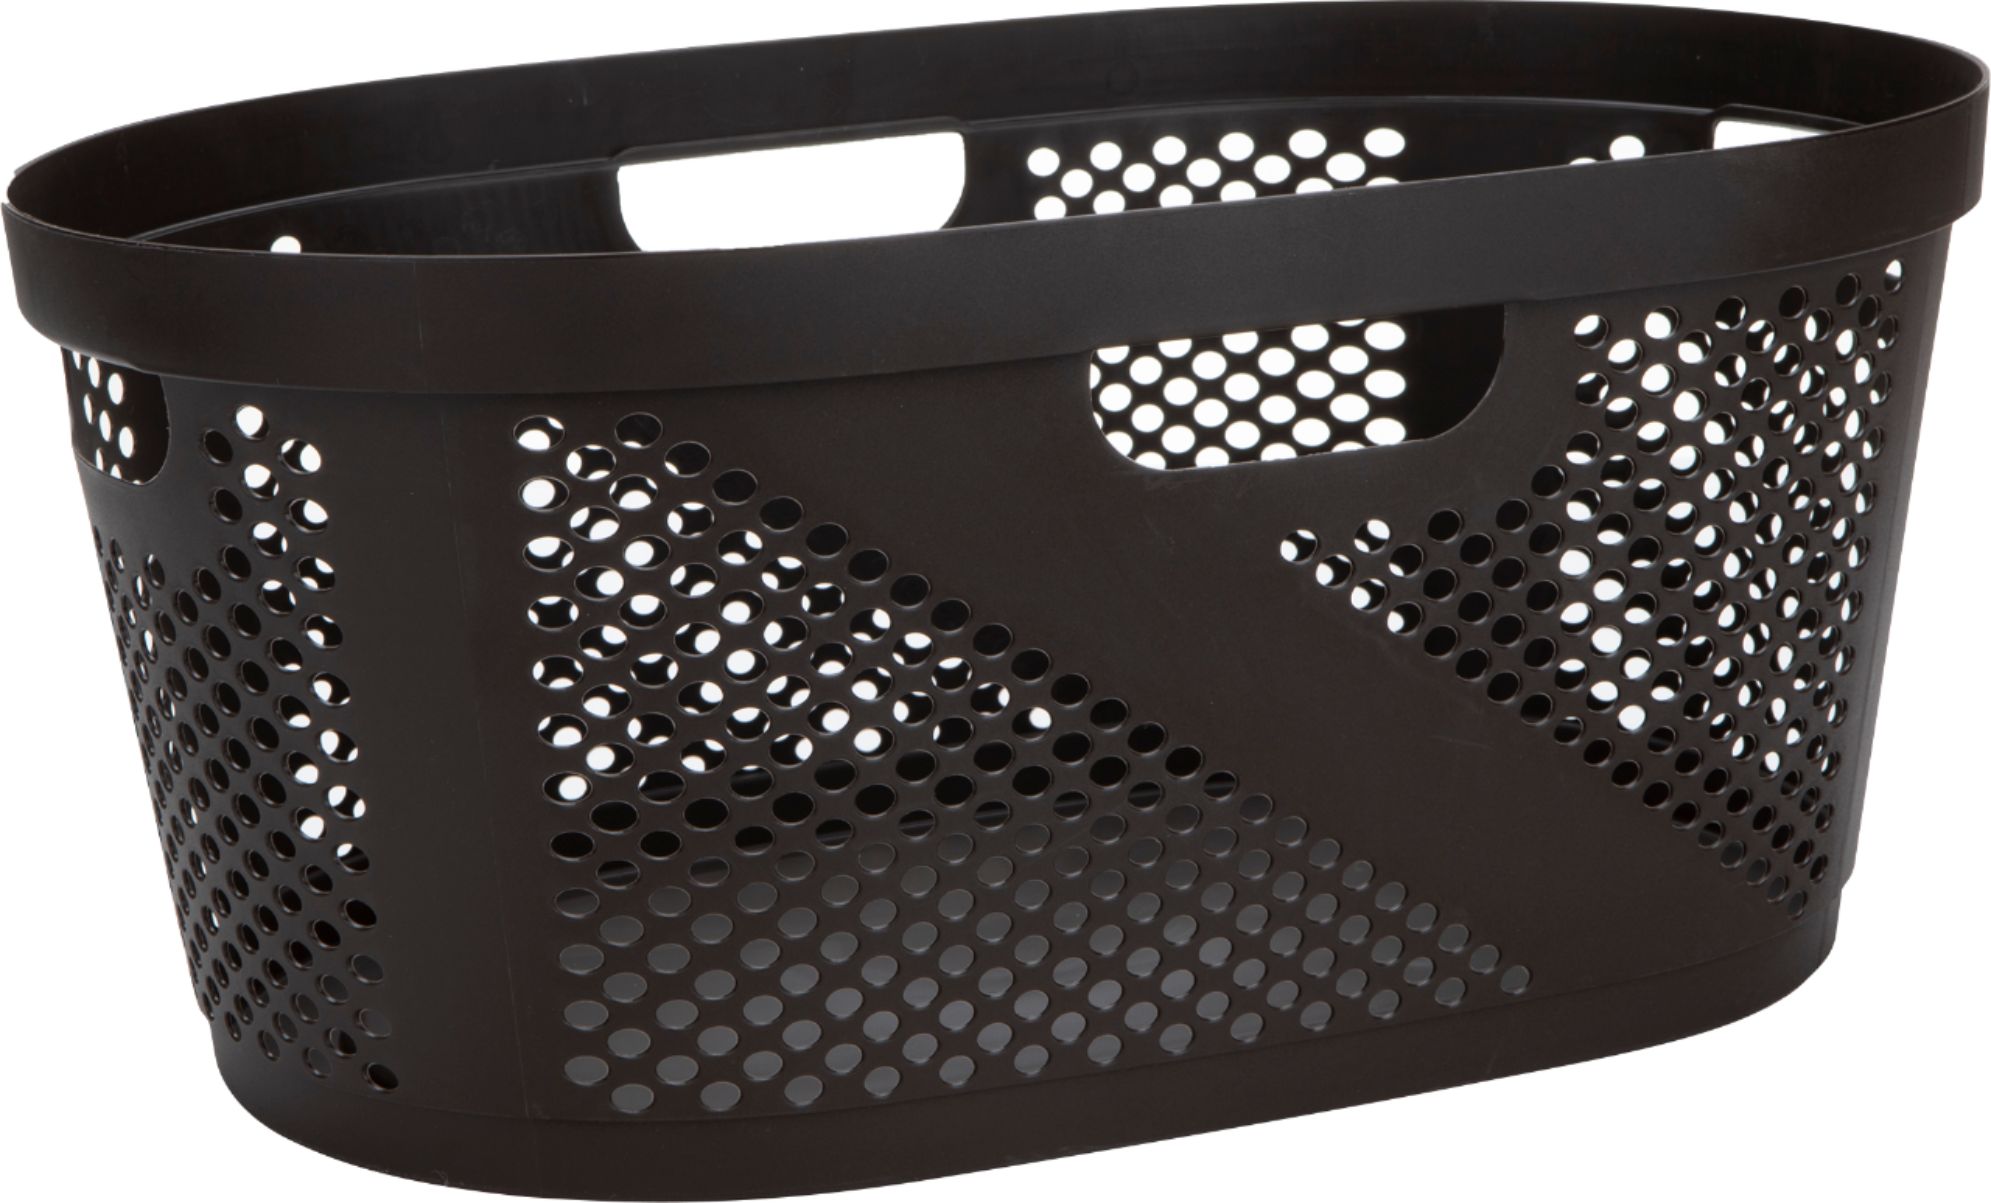 Angle View: Mind Reader - 40 Liter Laundry Basket, Laundry Basket, Storage Basket, Bathroom, Bedroom, Home - Brown